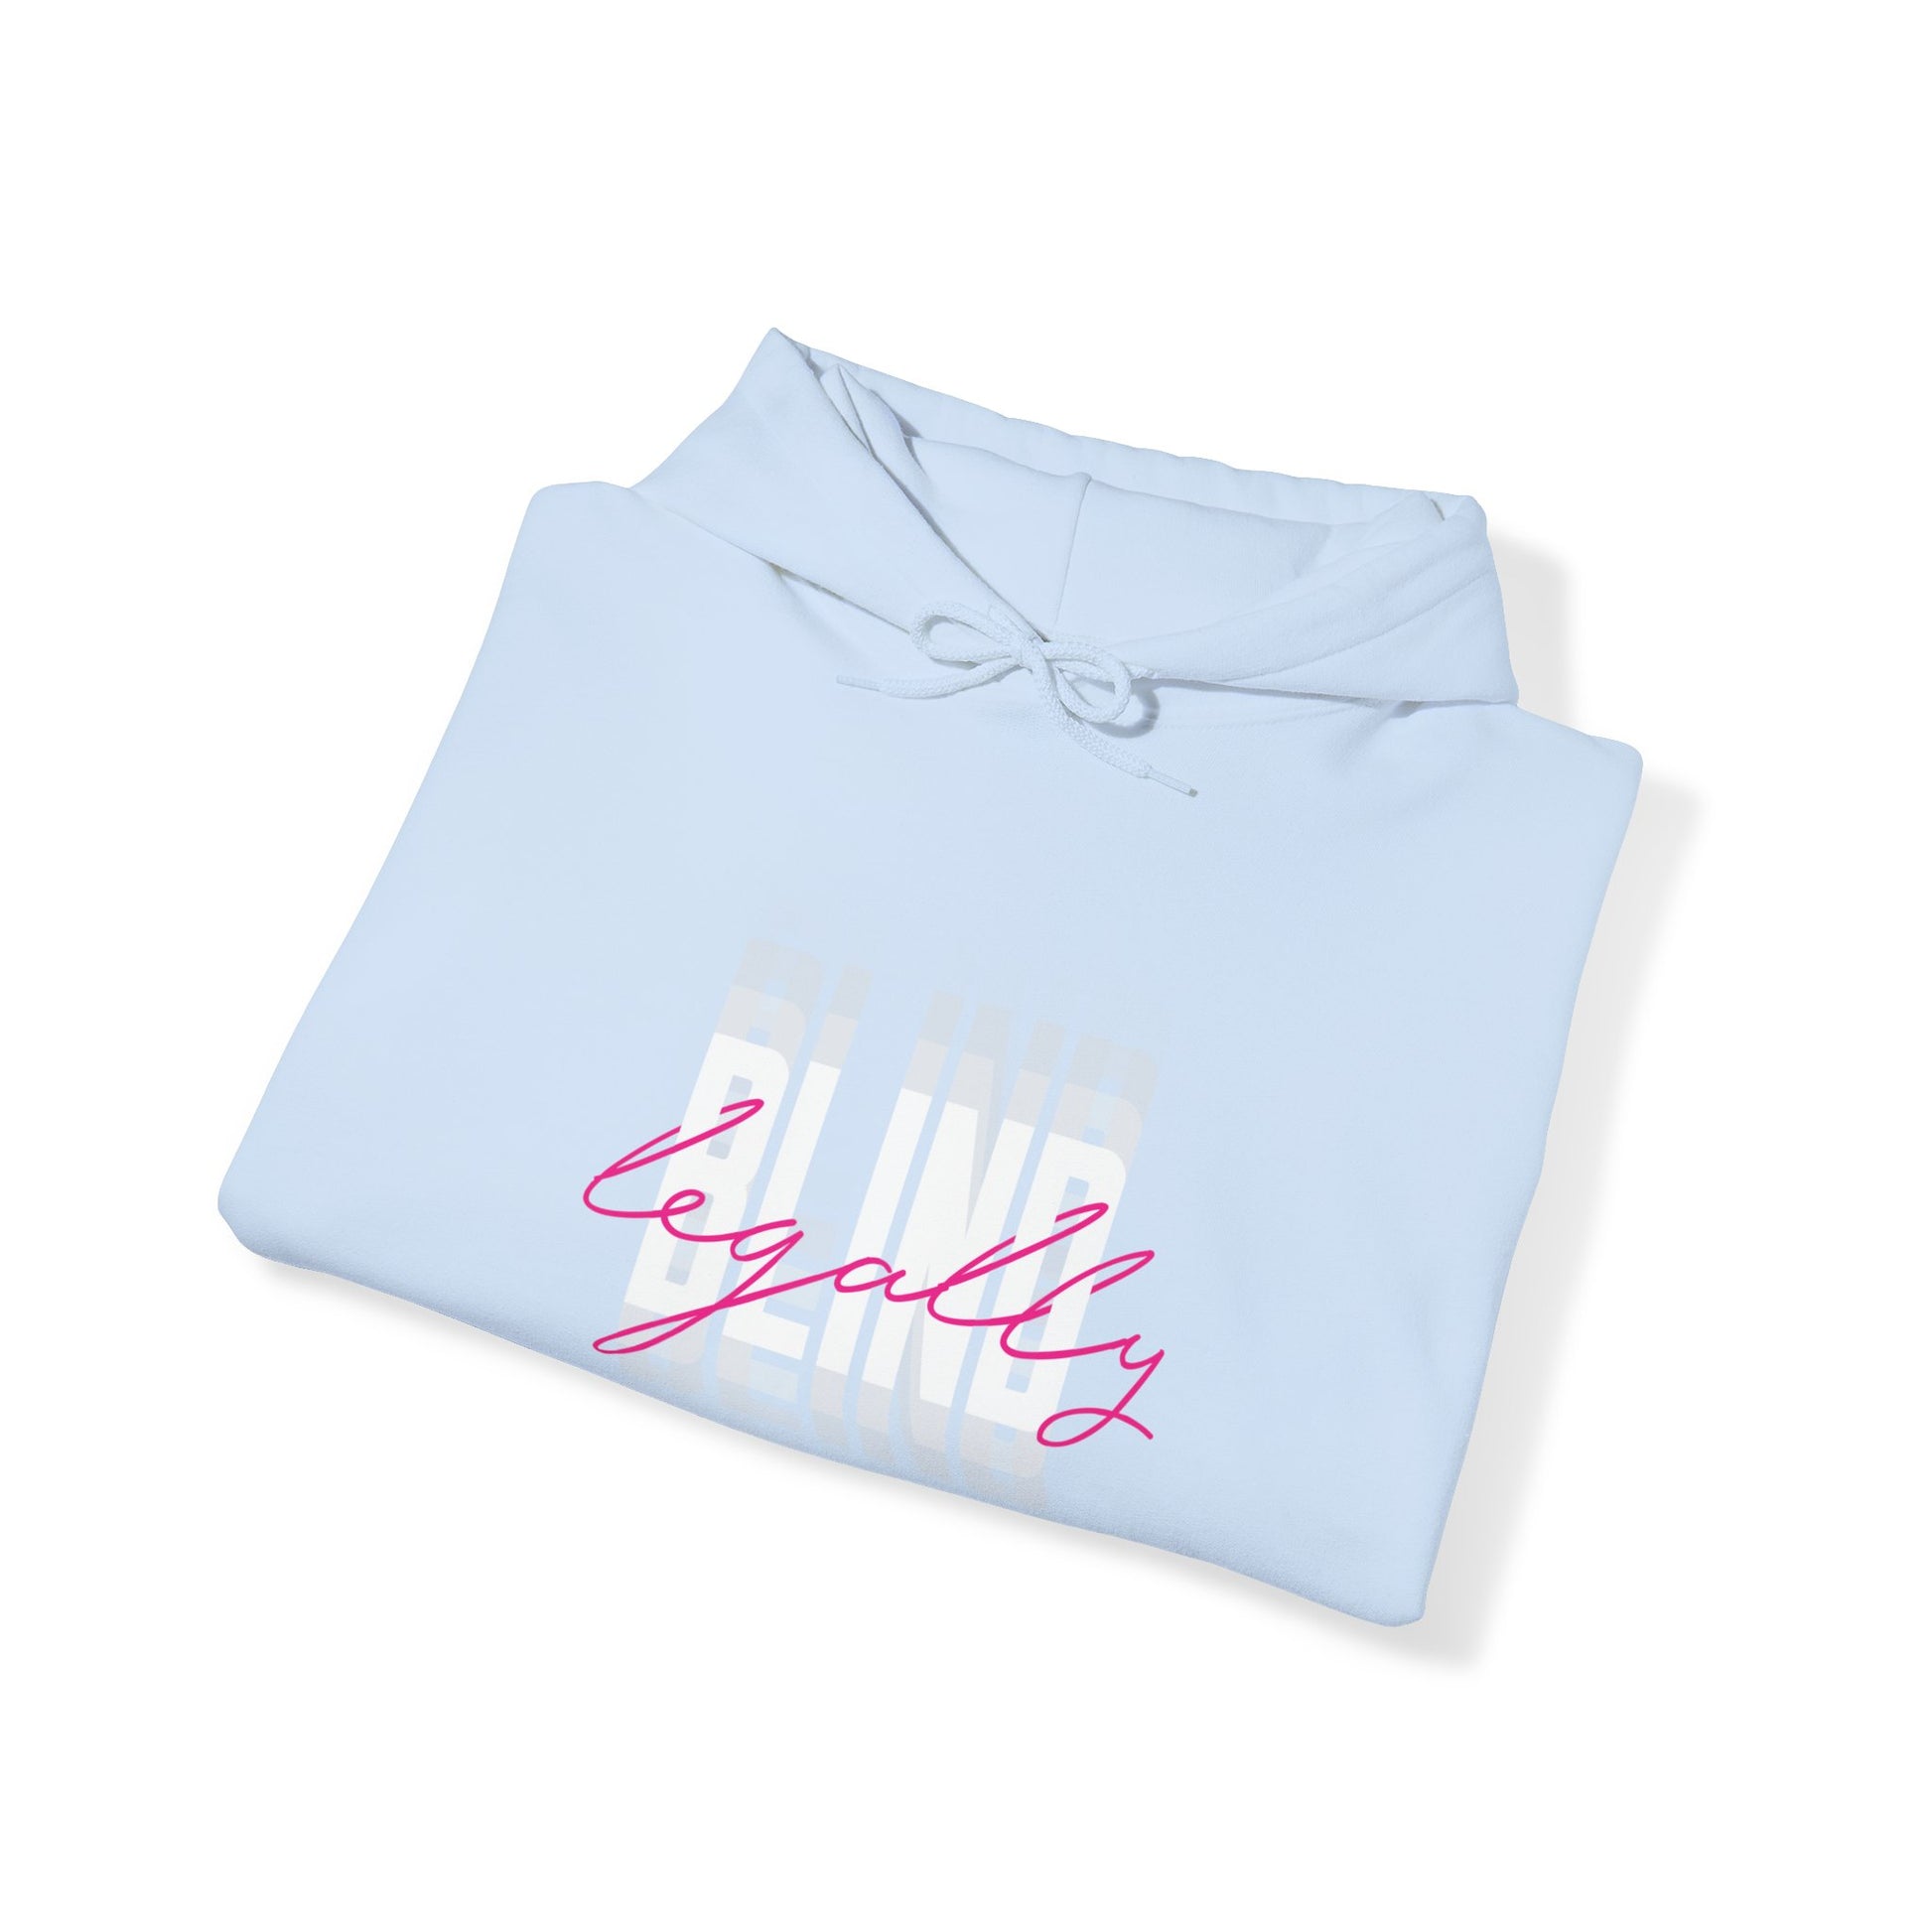 Legally Blind (Blurry) w/ pink- Unisex Heavy Blend™ Hooded Sweatshirt